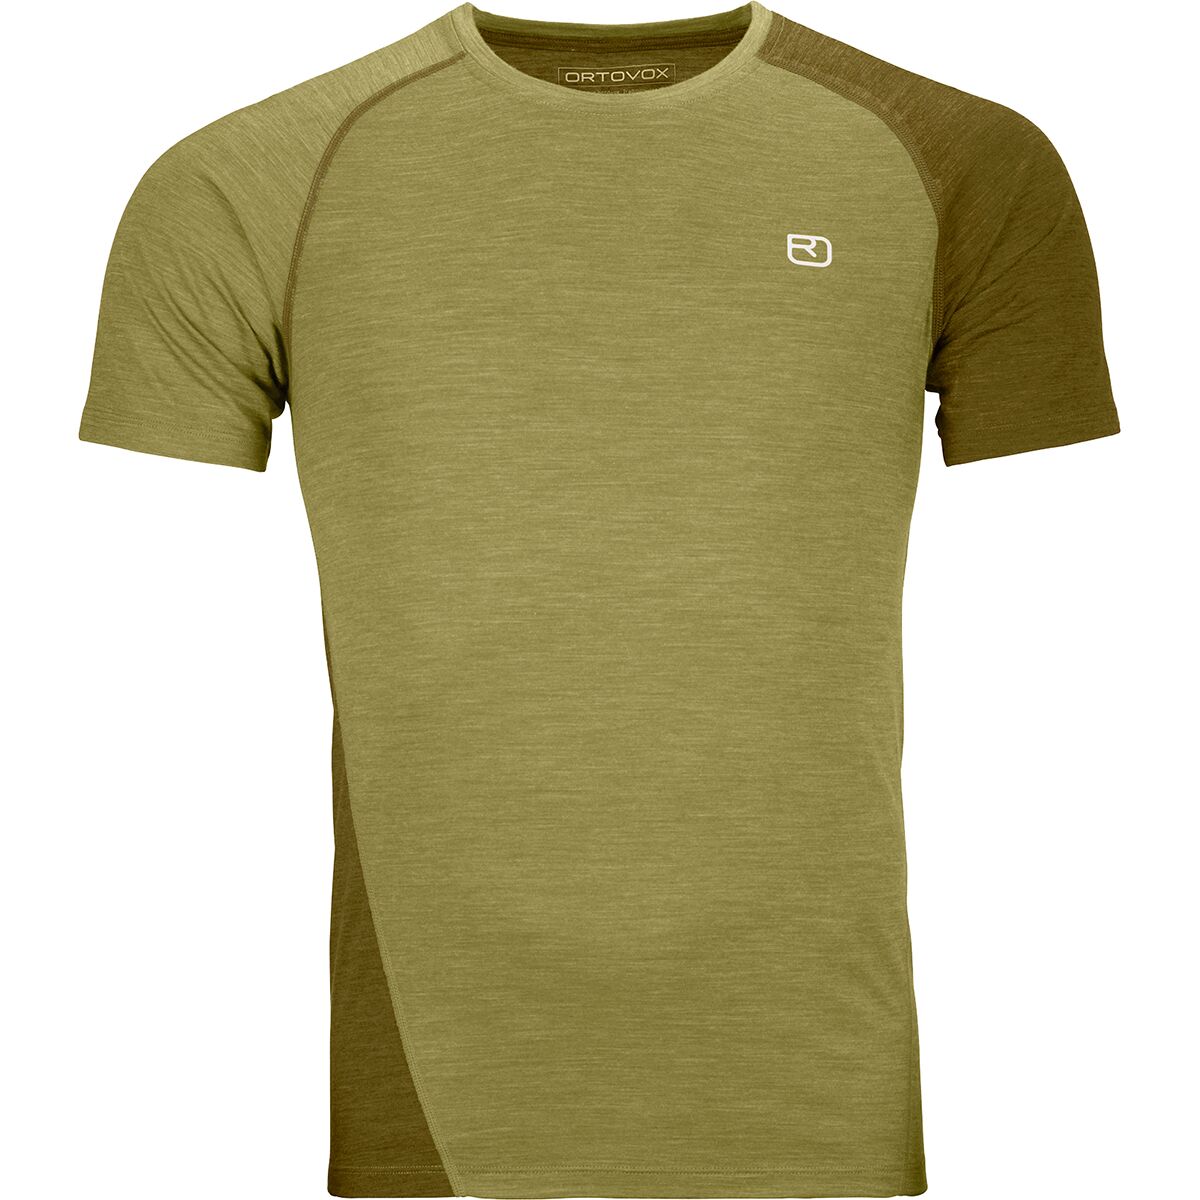 120 Cool Tec Fast Upward T-Shirt - Men